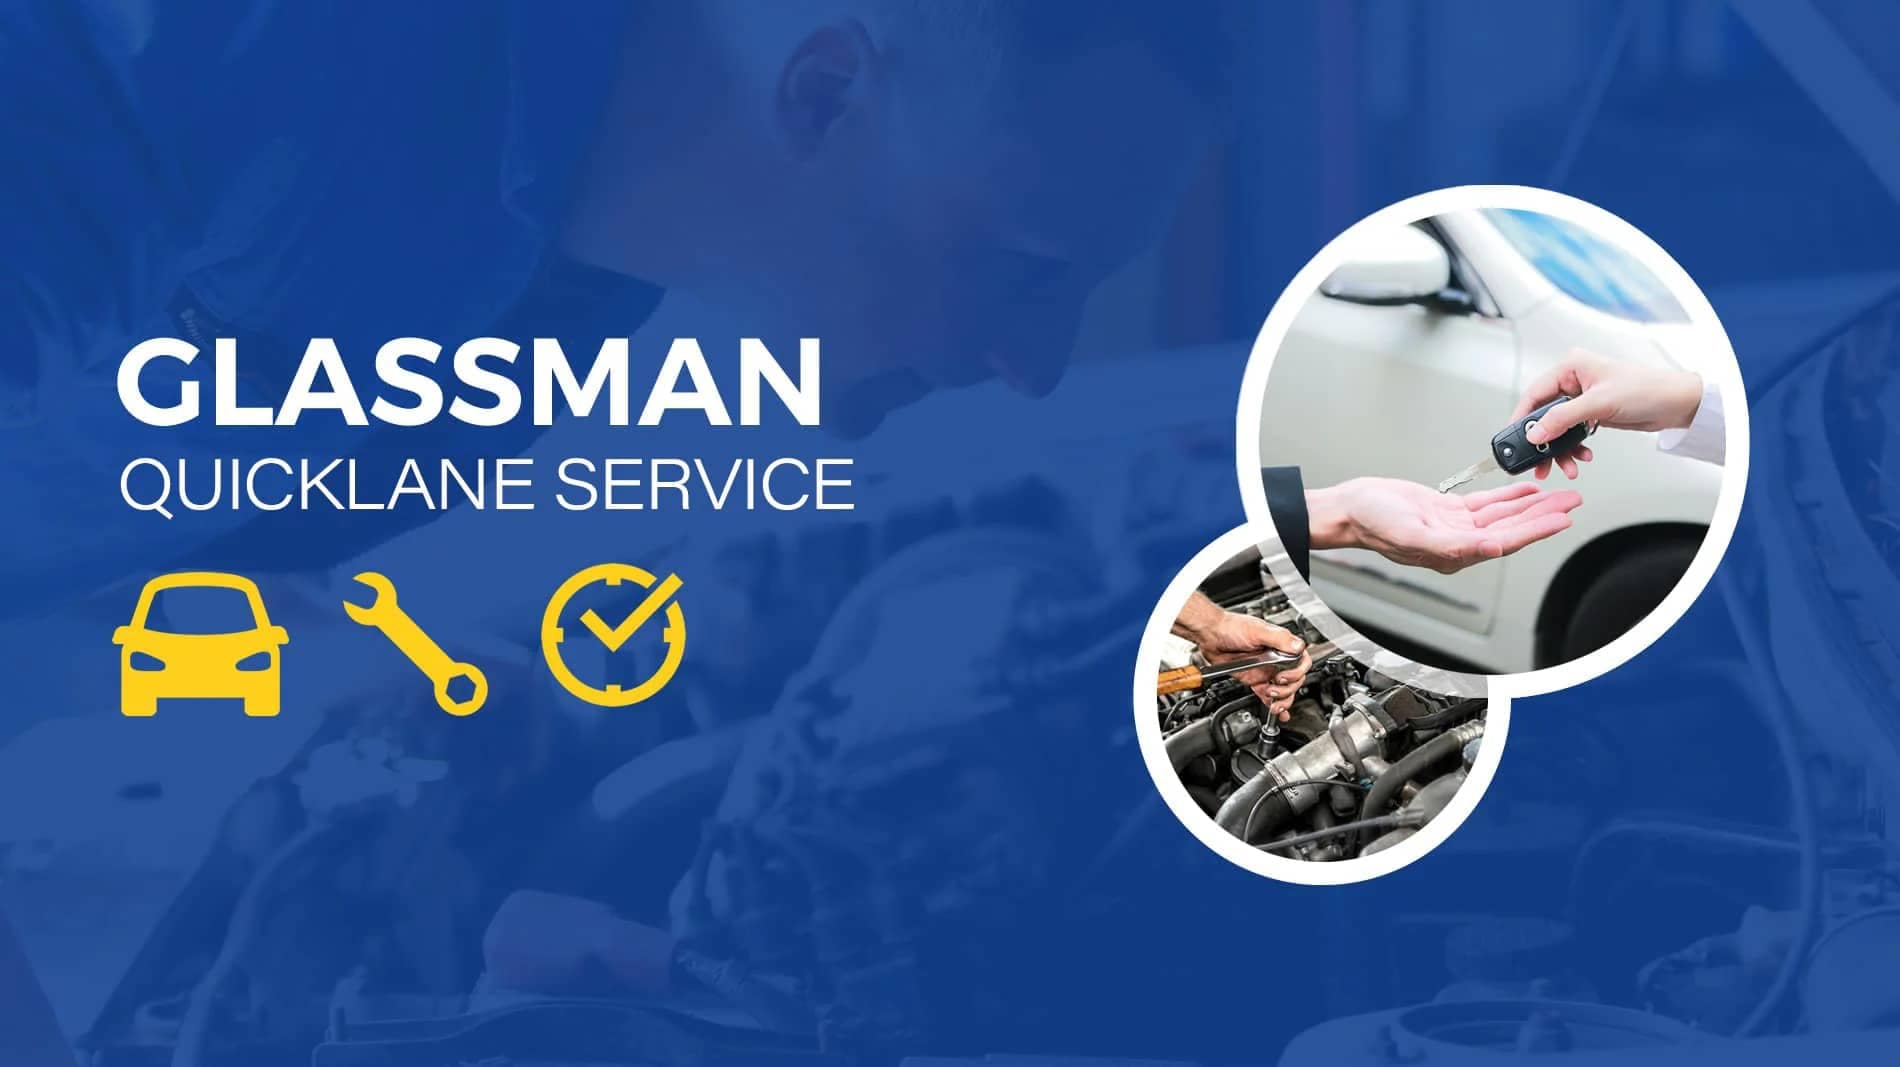 Glassman Quick lane Service